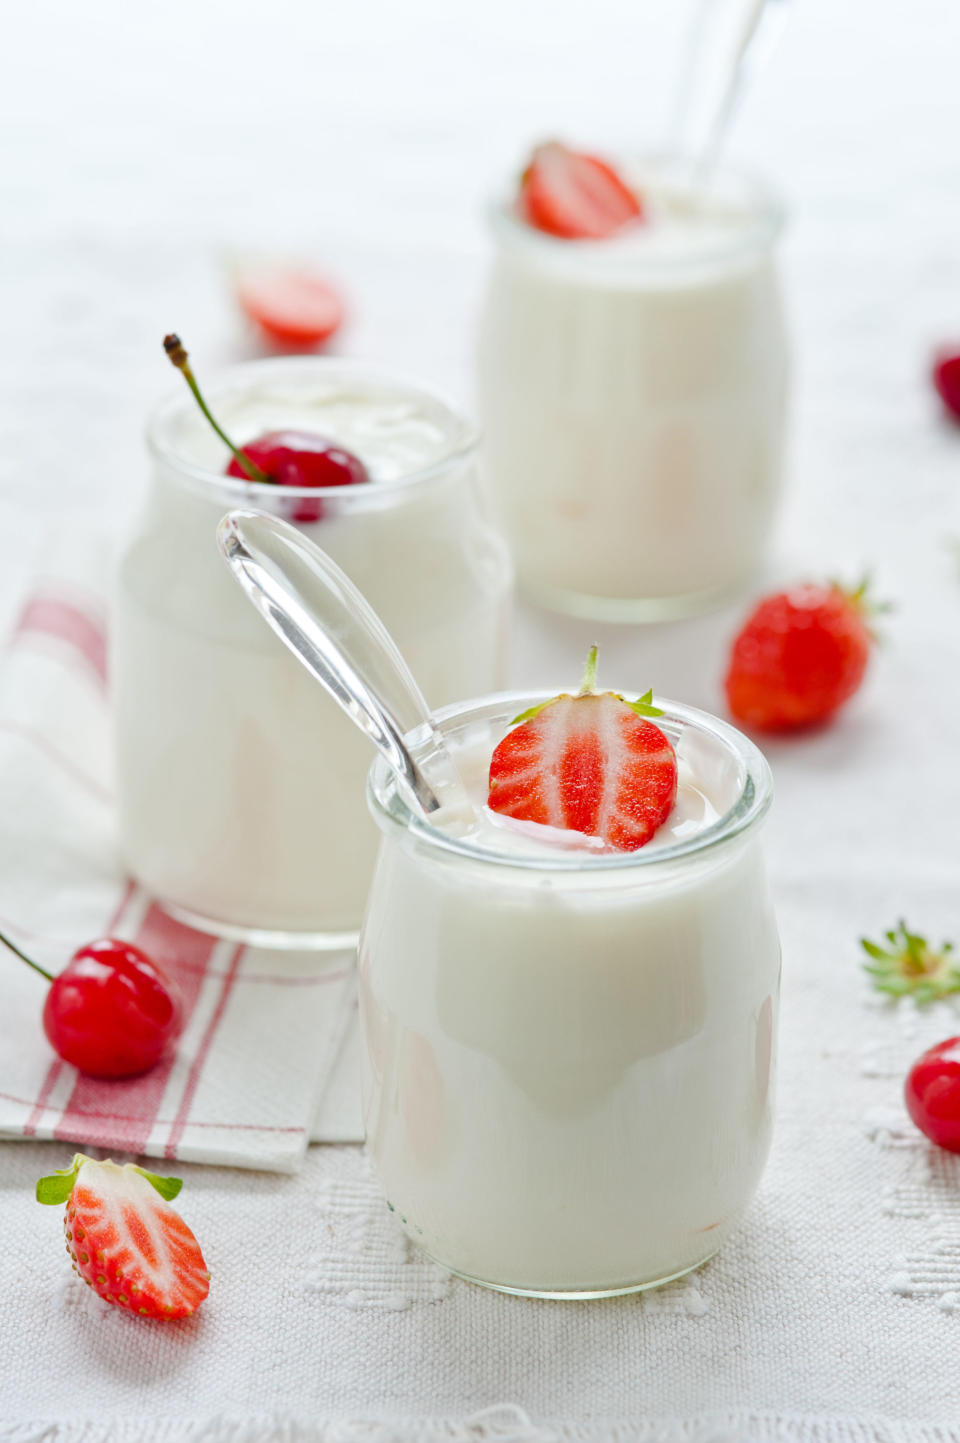 5) Yogurt